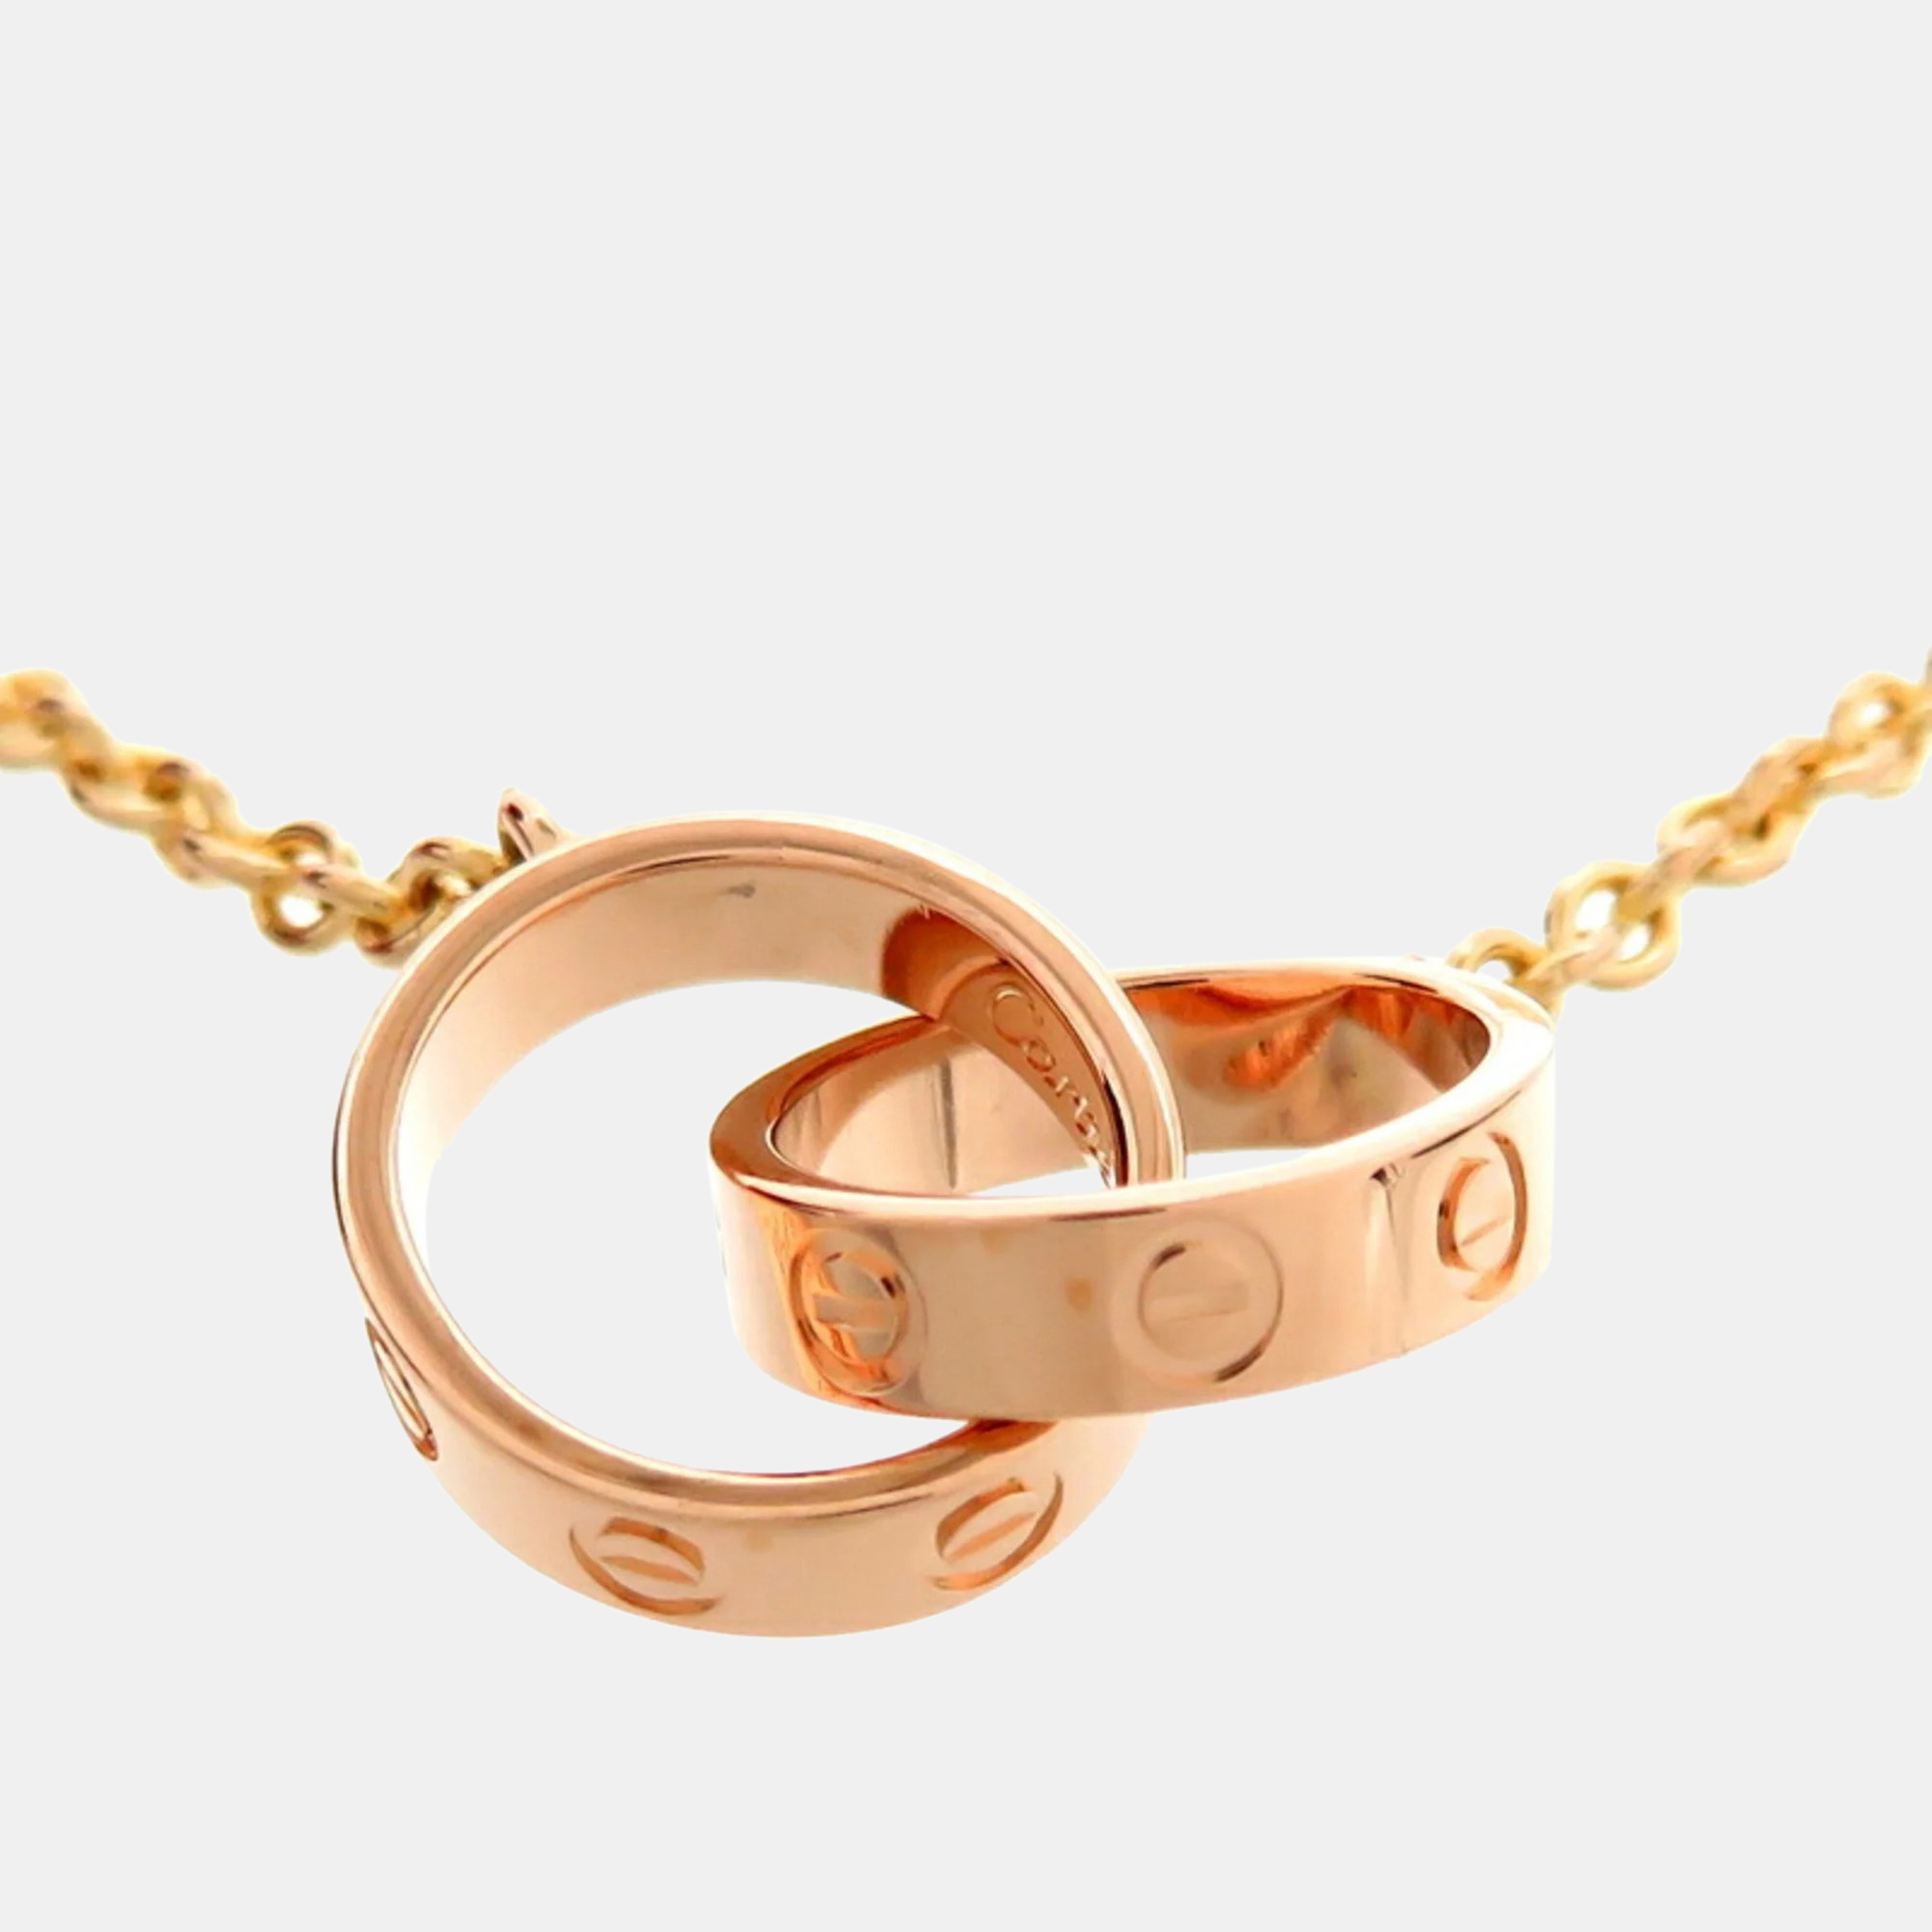 Cartier 18K Rose Gold Love Pendant Necklace